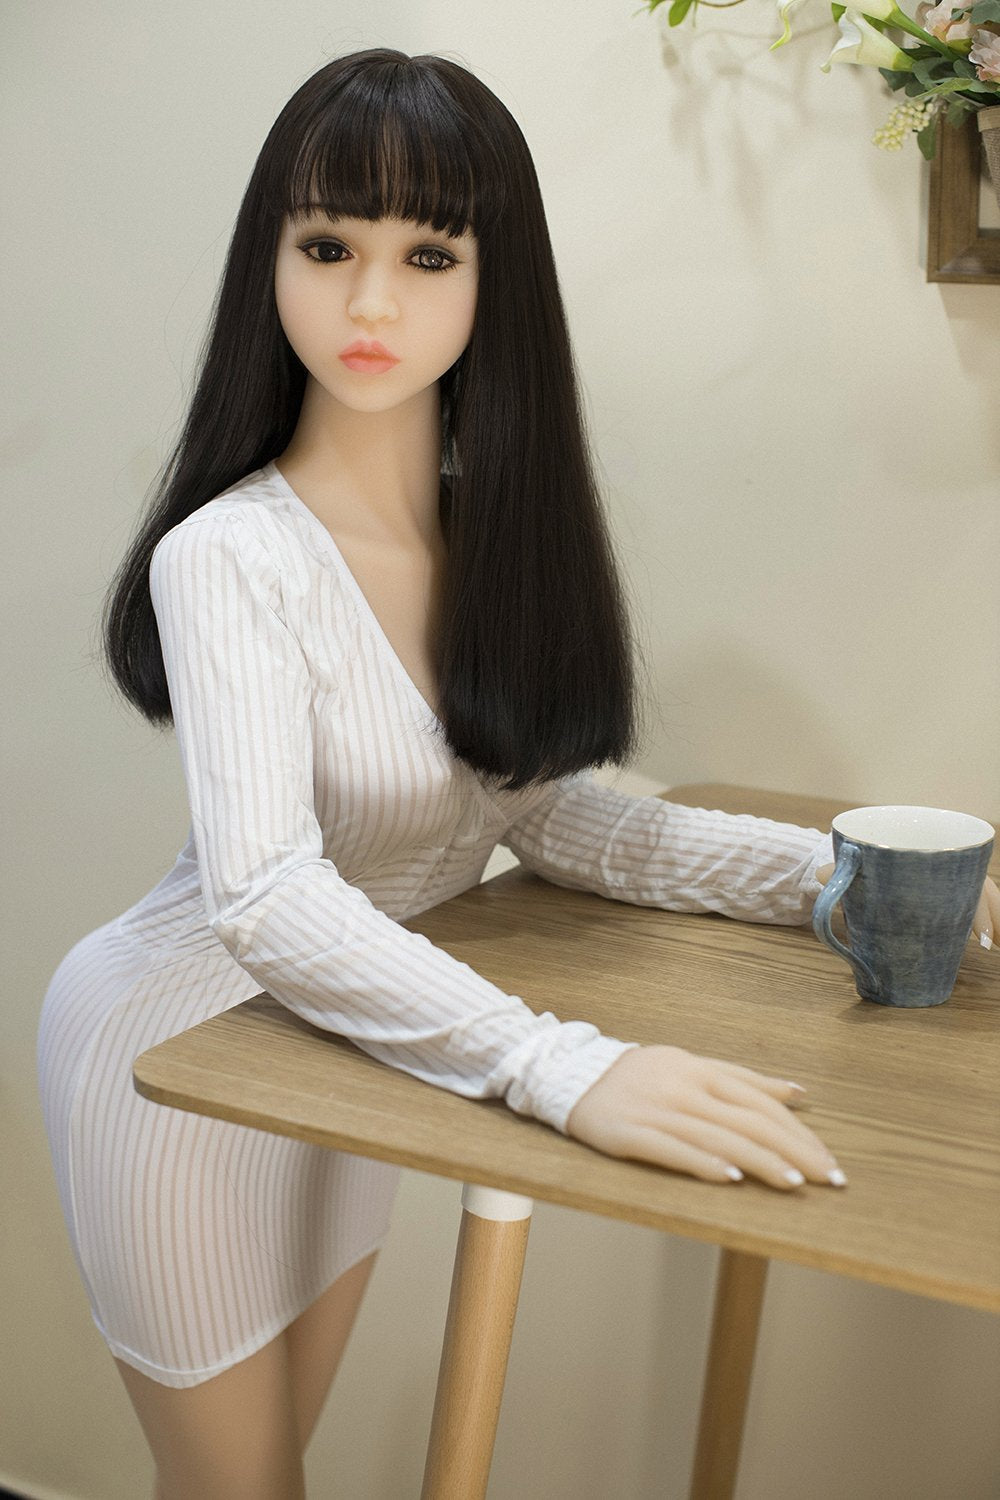 US Stock - Ridmii Beatrice 158CM #088 Head Sex Doll - 158cm, US Stock - SexDollPartner